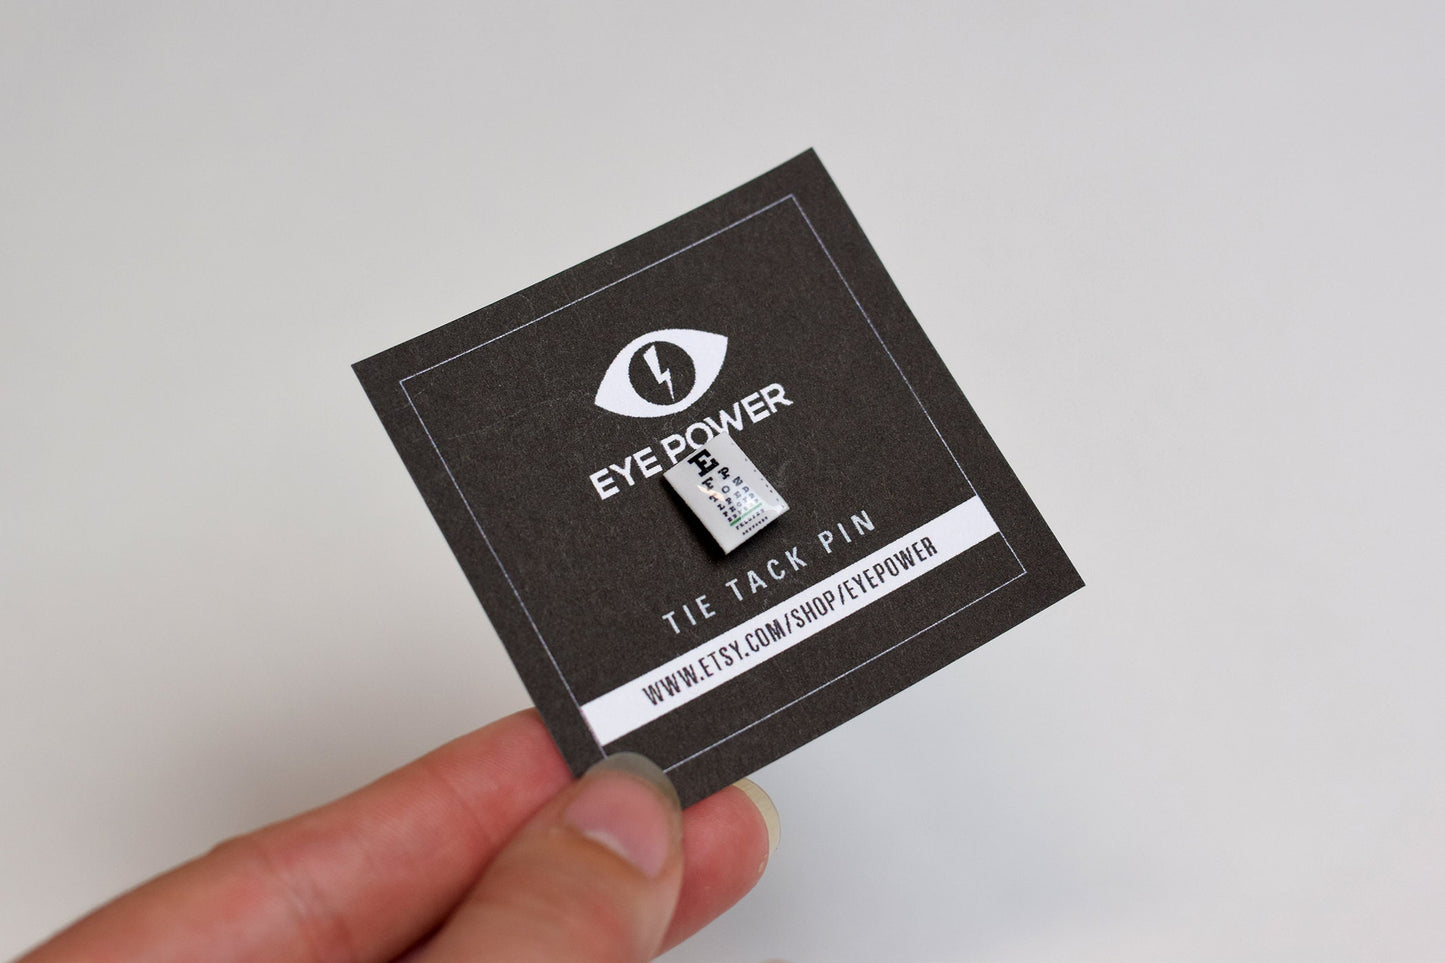 Tiny Eye Chart Tie tack Pin, Snellen Eye Chart Pin, Optometry Pin, optometry jewelry, Optometrist gift, Eye chart, Tie tack, Eye Power